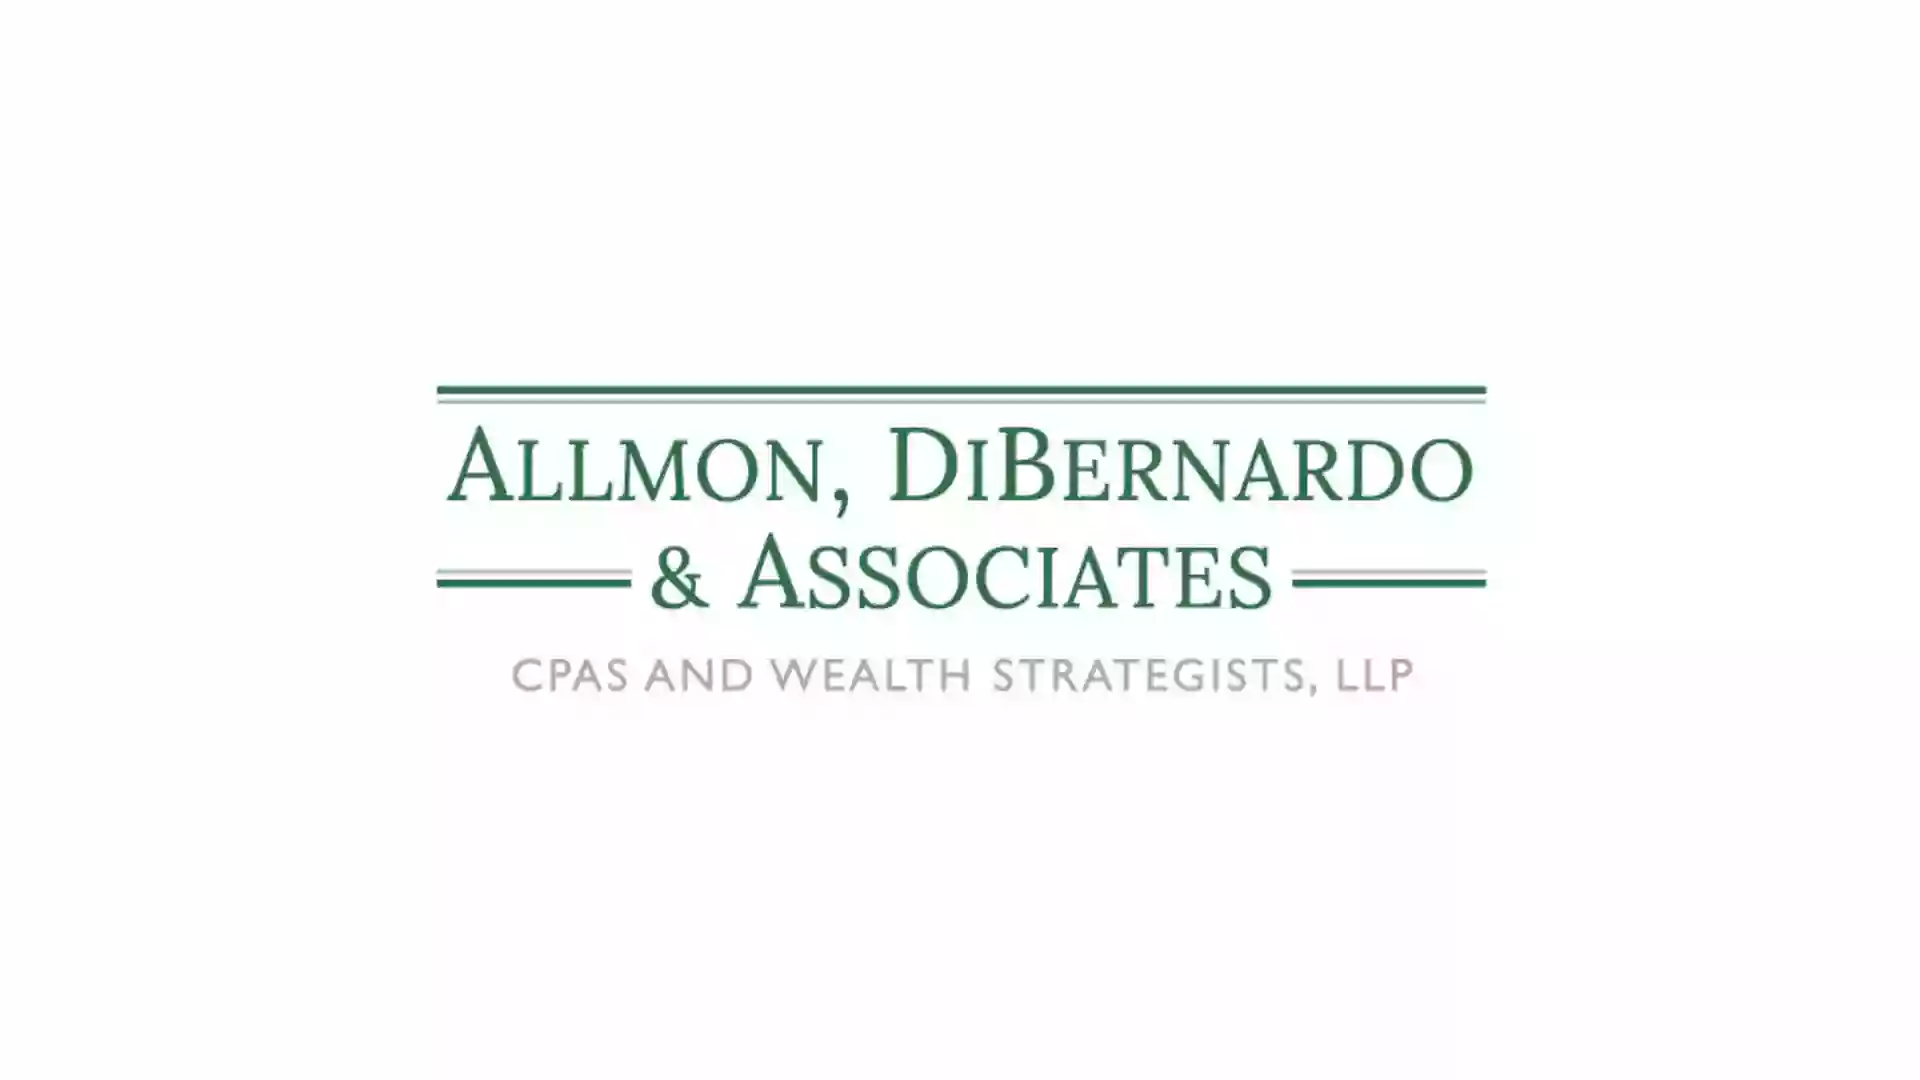 Allmon, DiBernardo & Associates CPAs and Wealth Strategists, LLP